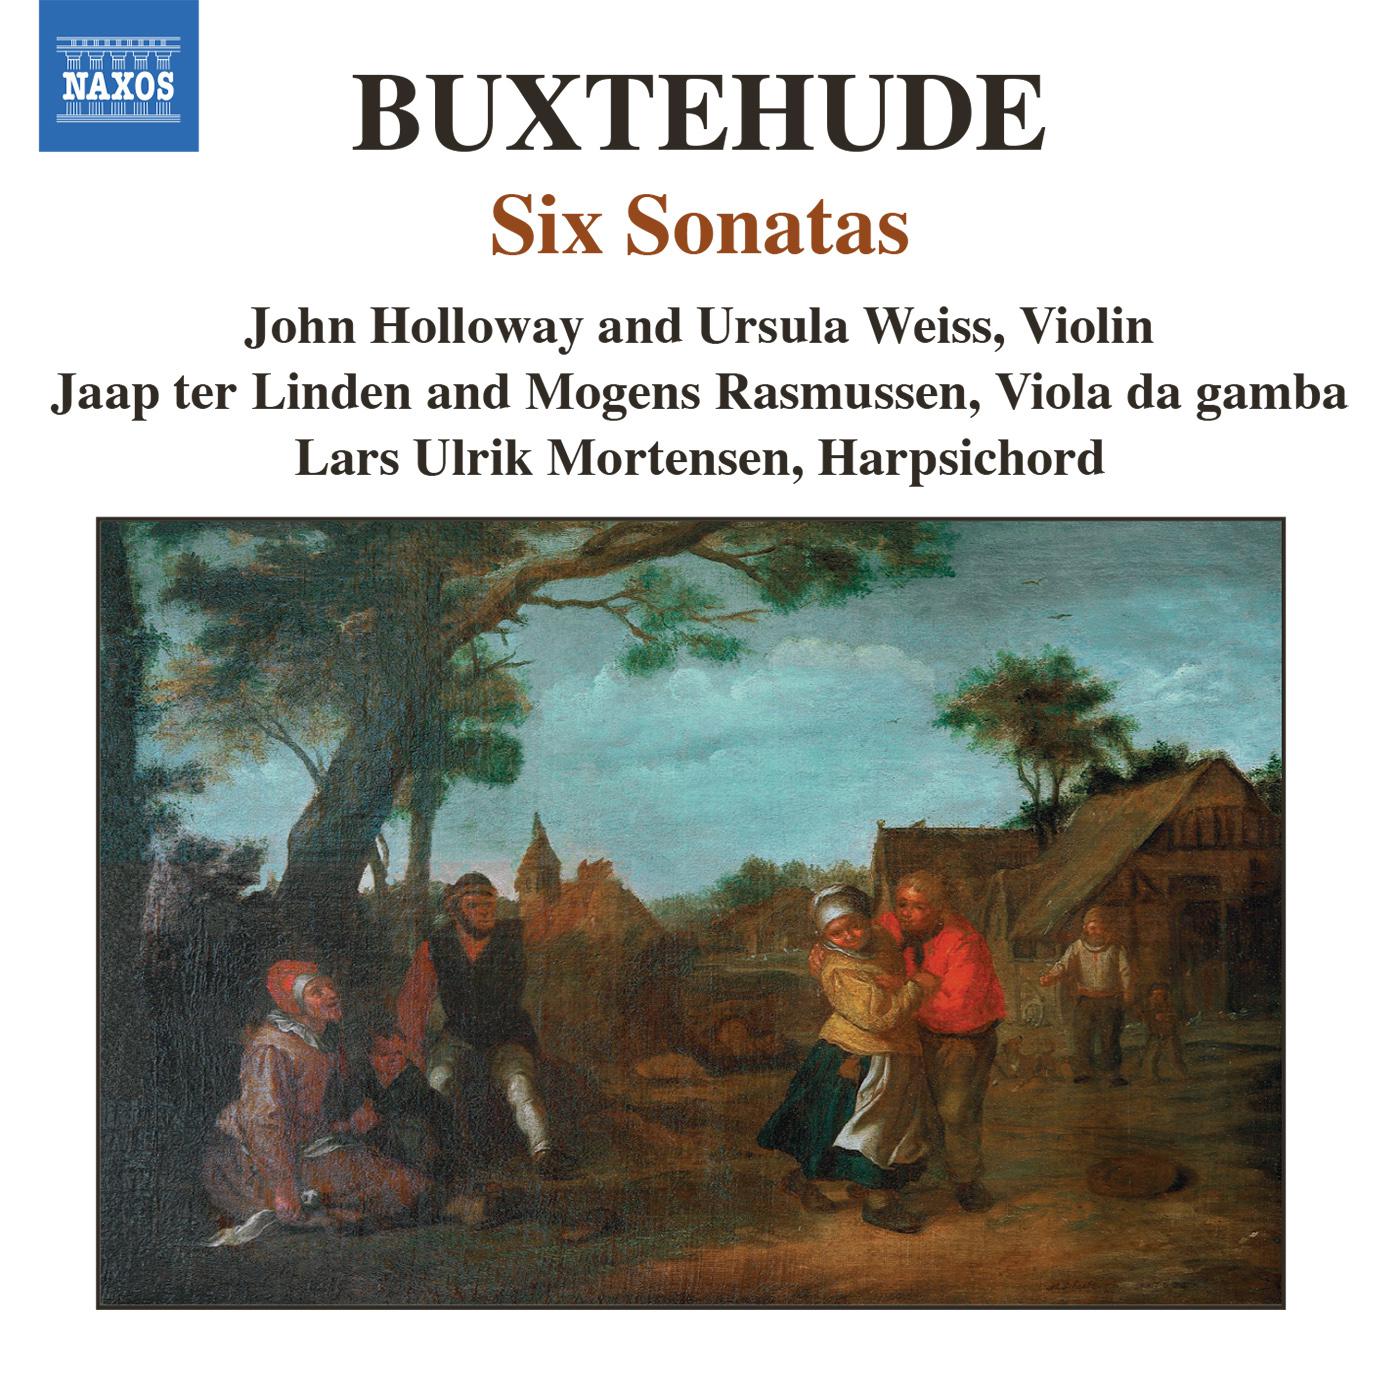 BUXTEHUDE: Chamber Music (Complete), Vol. 3 - 6 Sonatas